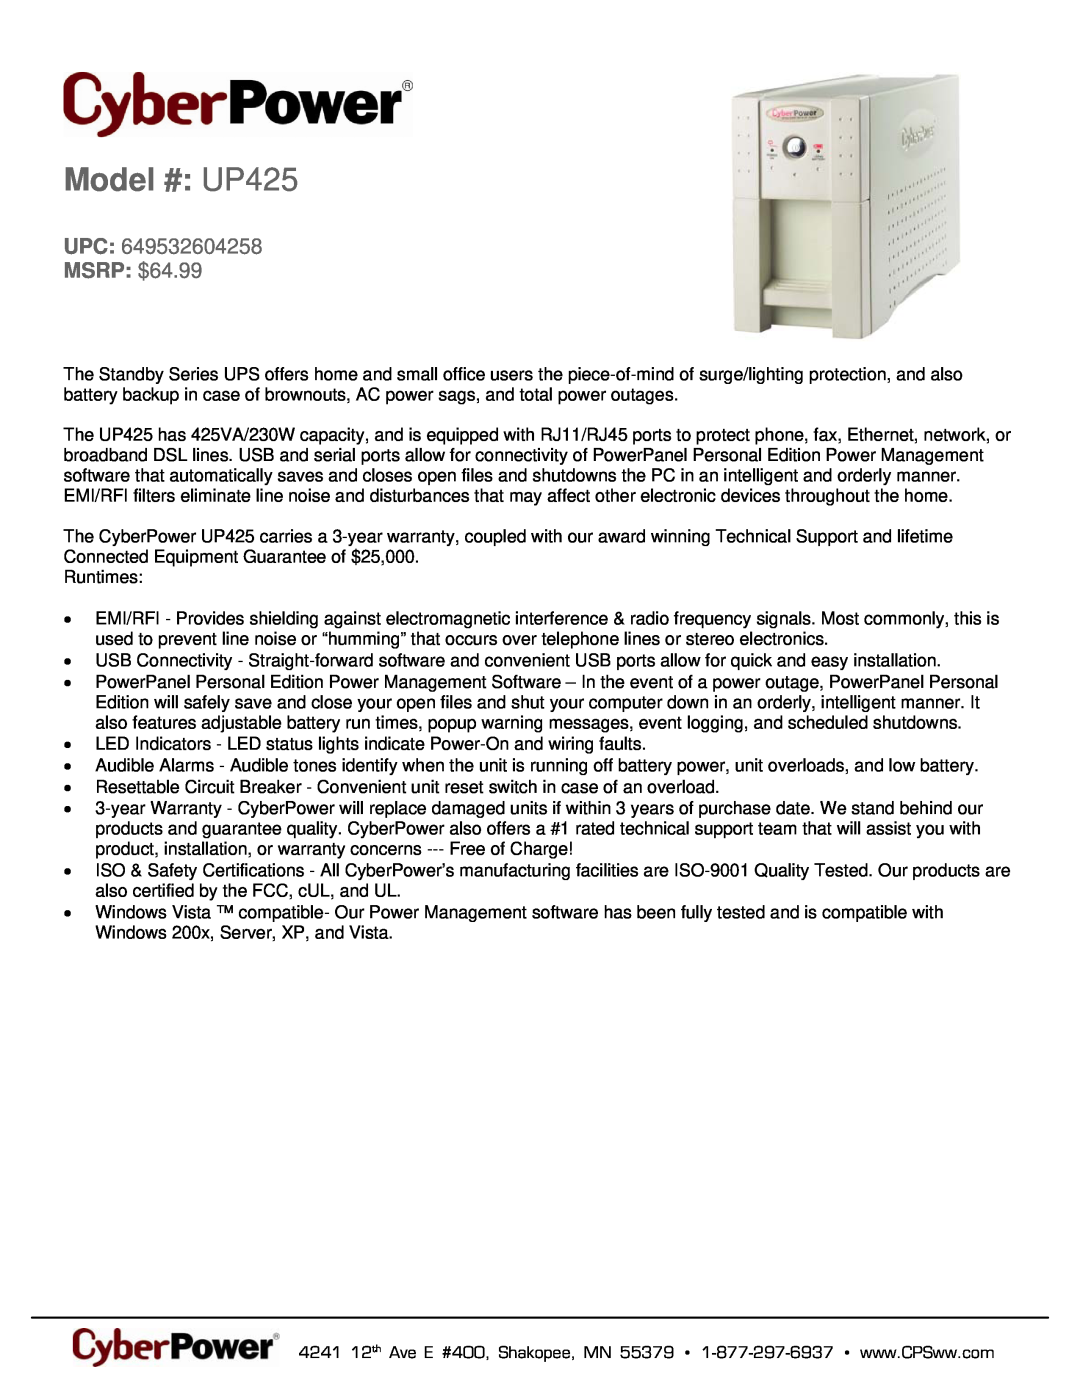 CyberPower Systems 649532604258 warranty Model # UP425, MSRP $64.99 